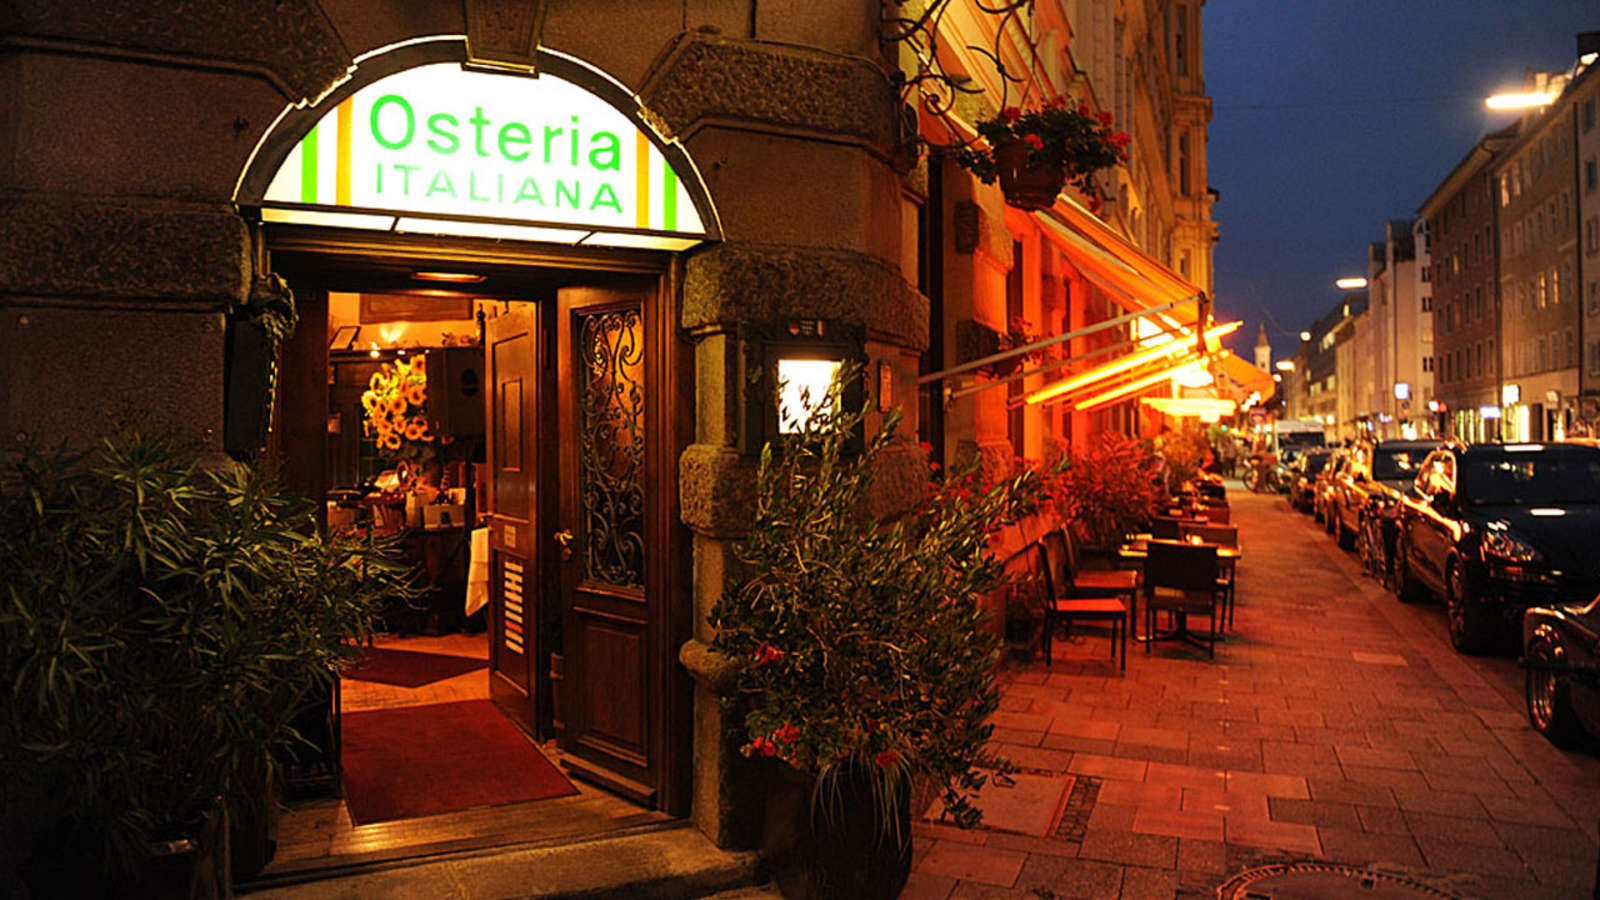 Osteria Italiana in der Schellingstrasse